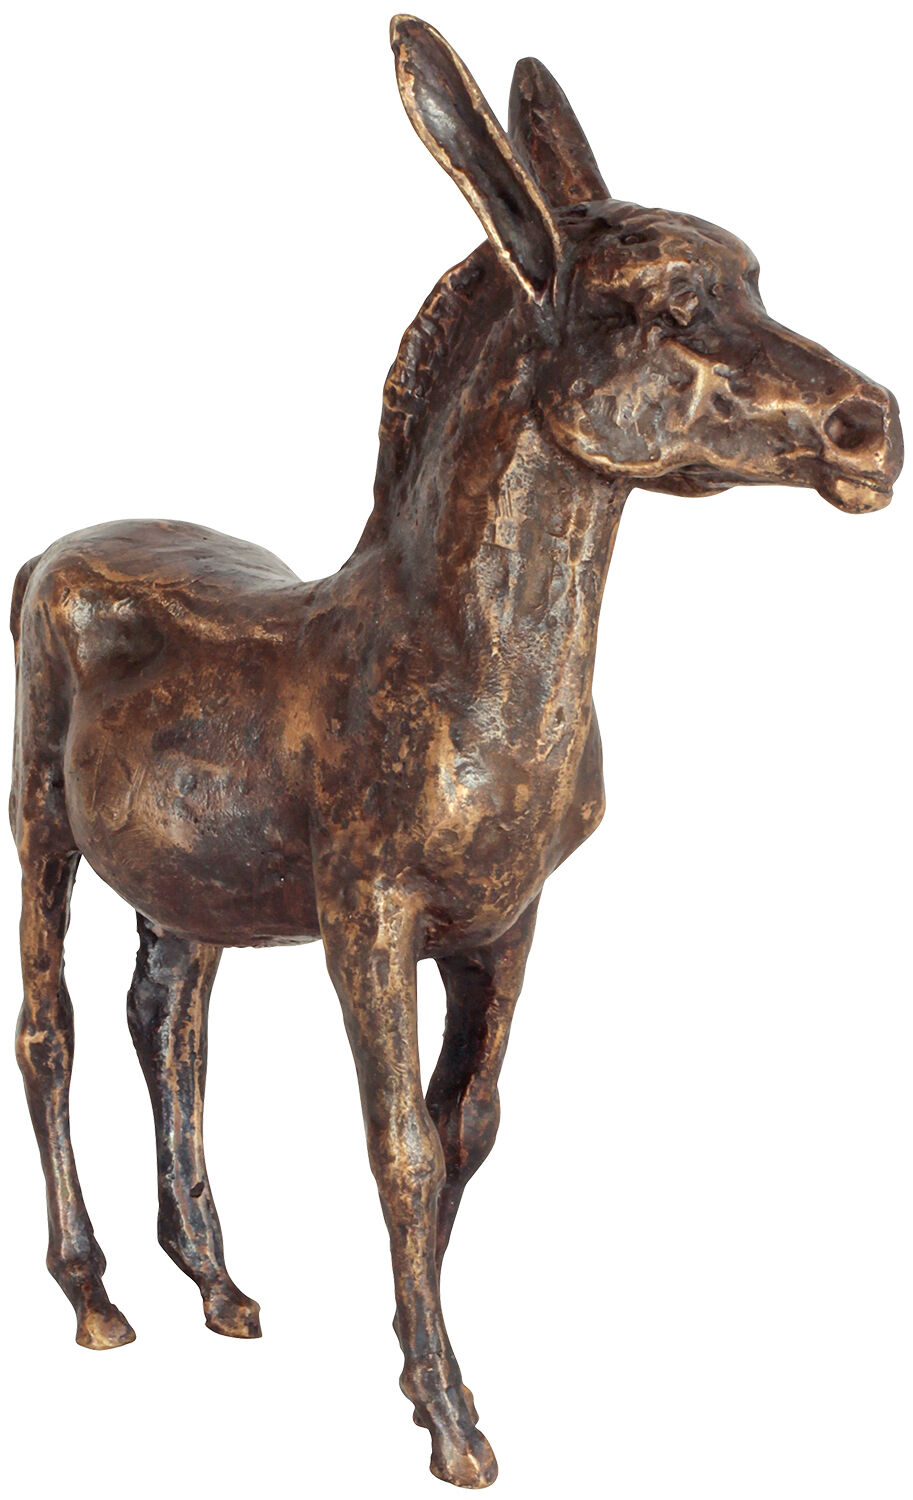 Sculpture "Donkey", reduction in bronze by Kurt Arentz